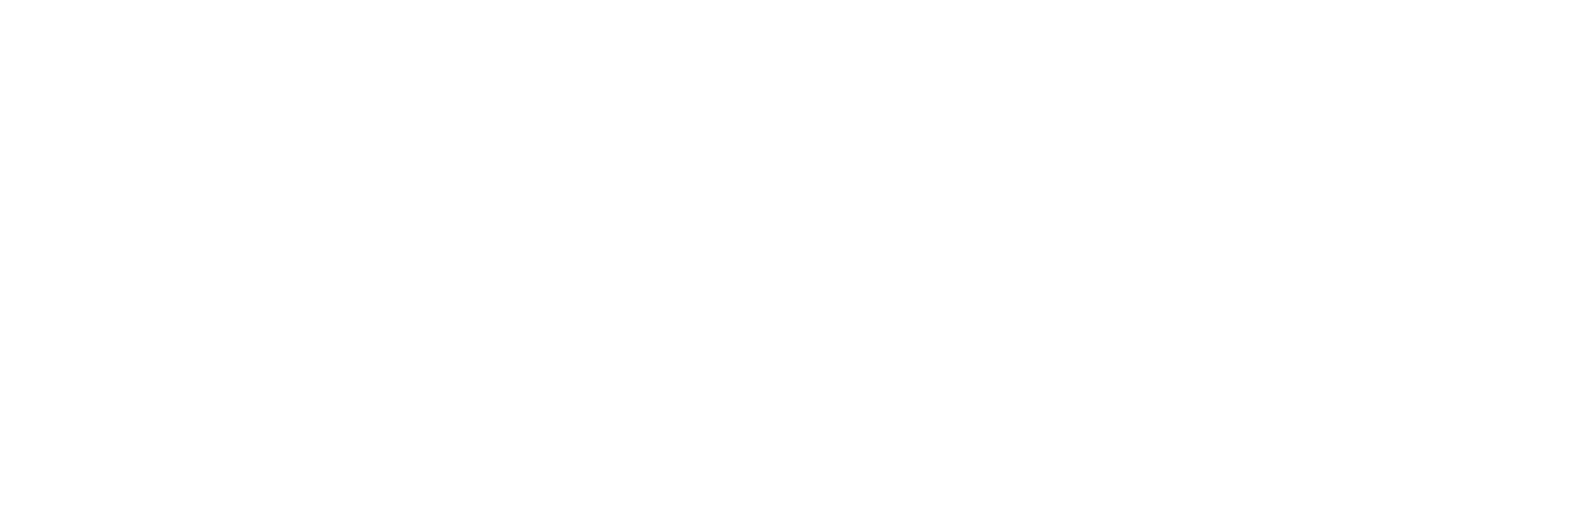 Superior Group of Companies Logo groß für dunkle Hintergründe (transparentes PNG)